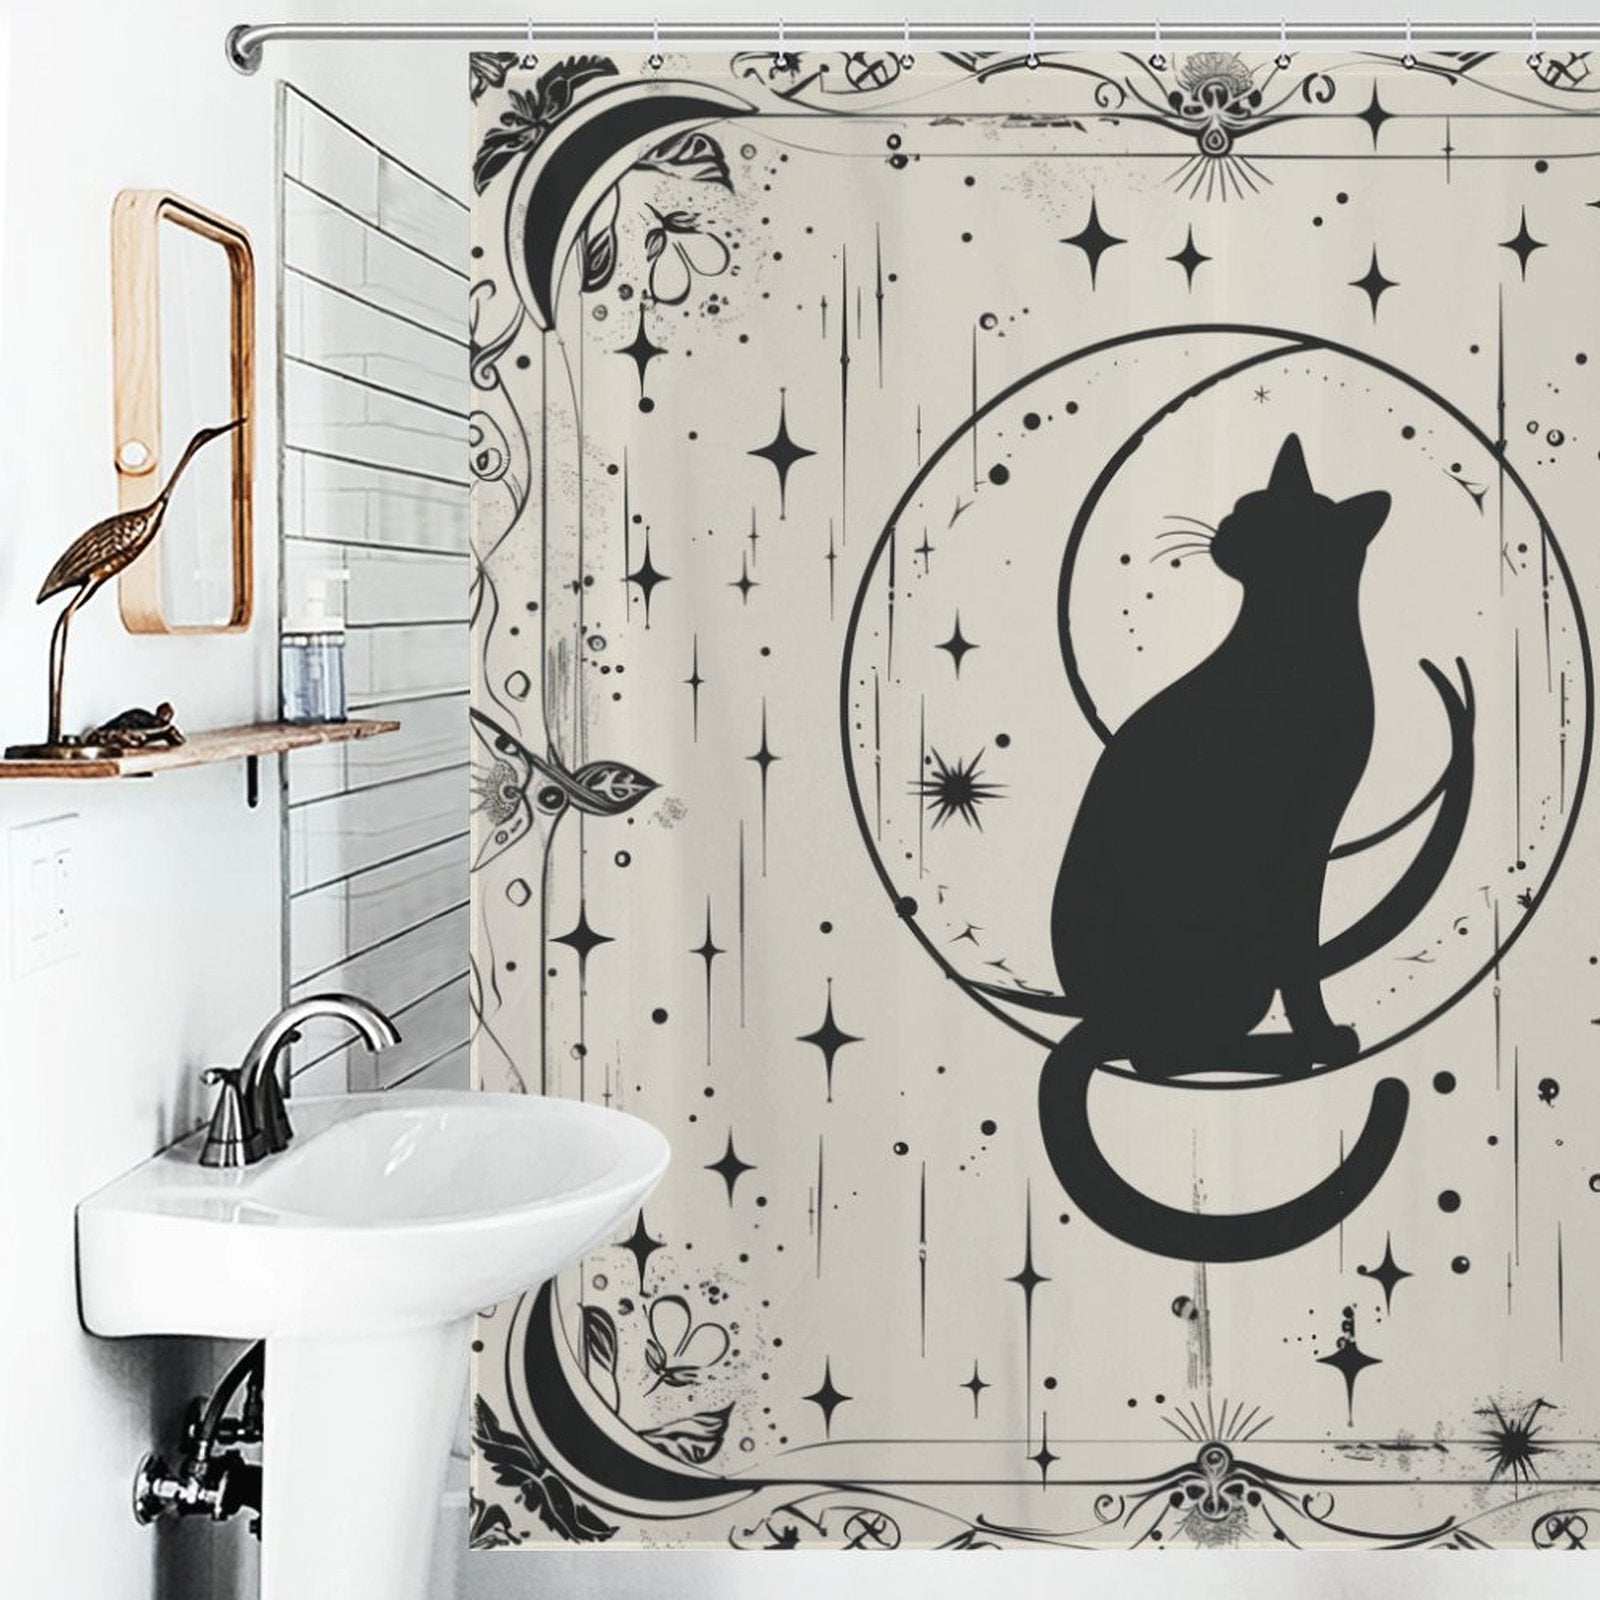 Boho Black Cat and Moon Shower Curtain